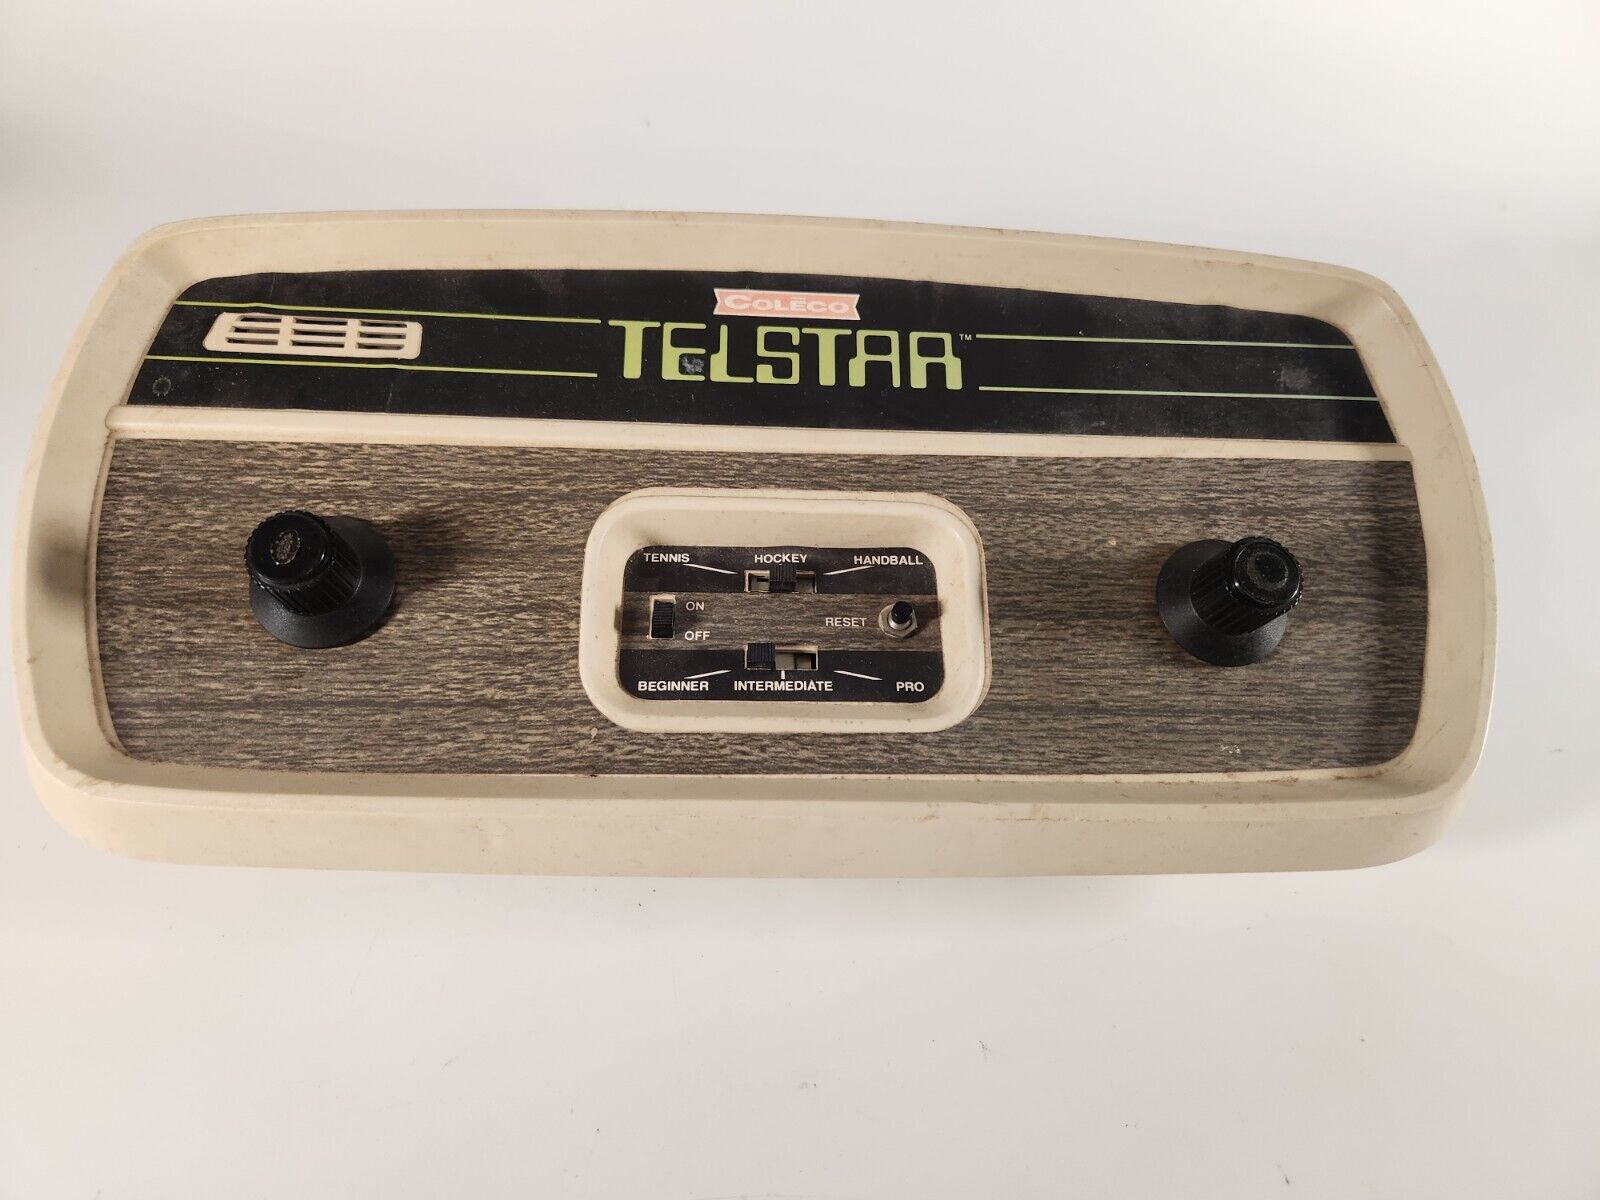 Vintage Coleco Telstar Arcade Video Game Console Model 6040 Tennis Hockey...